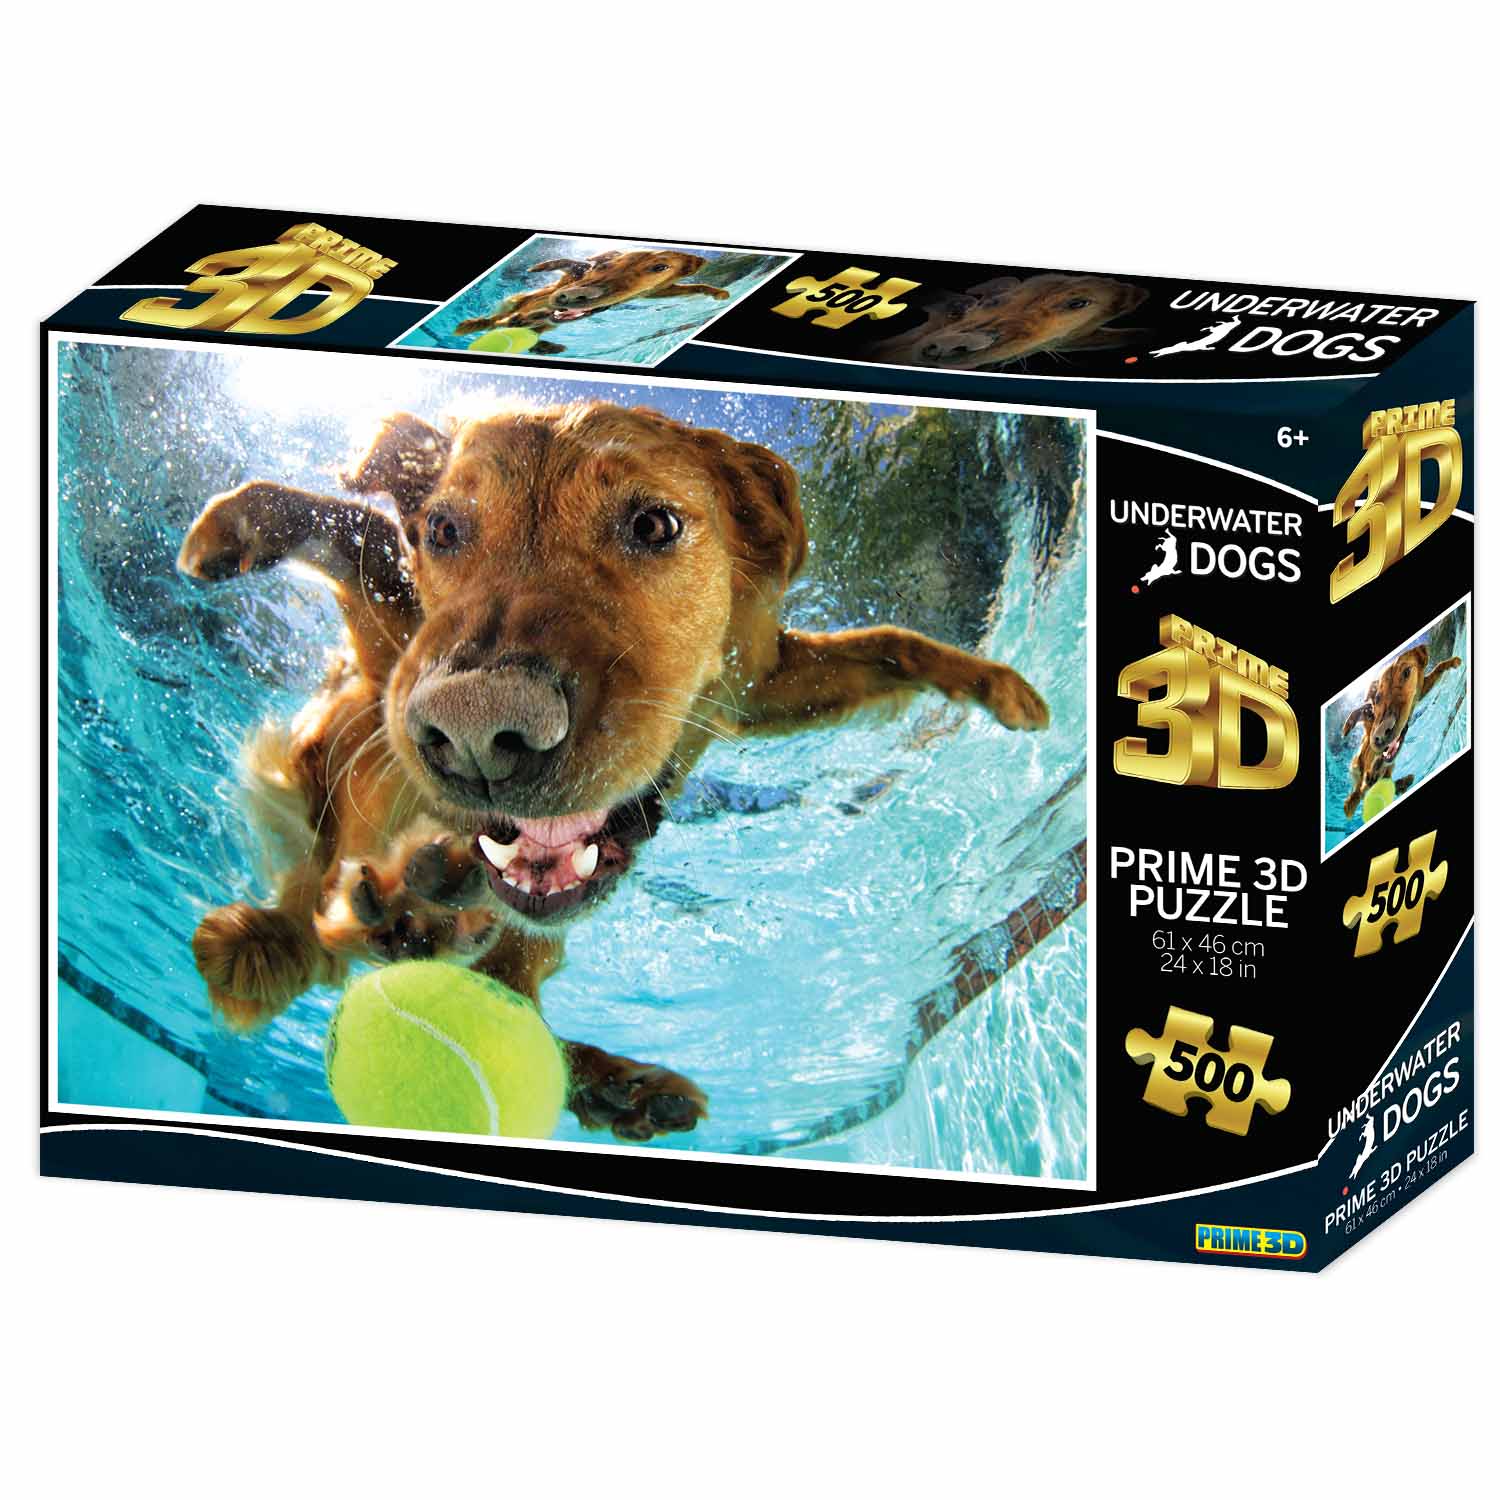 Underwater Dogs Ricochet